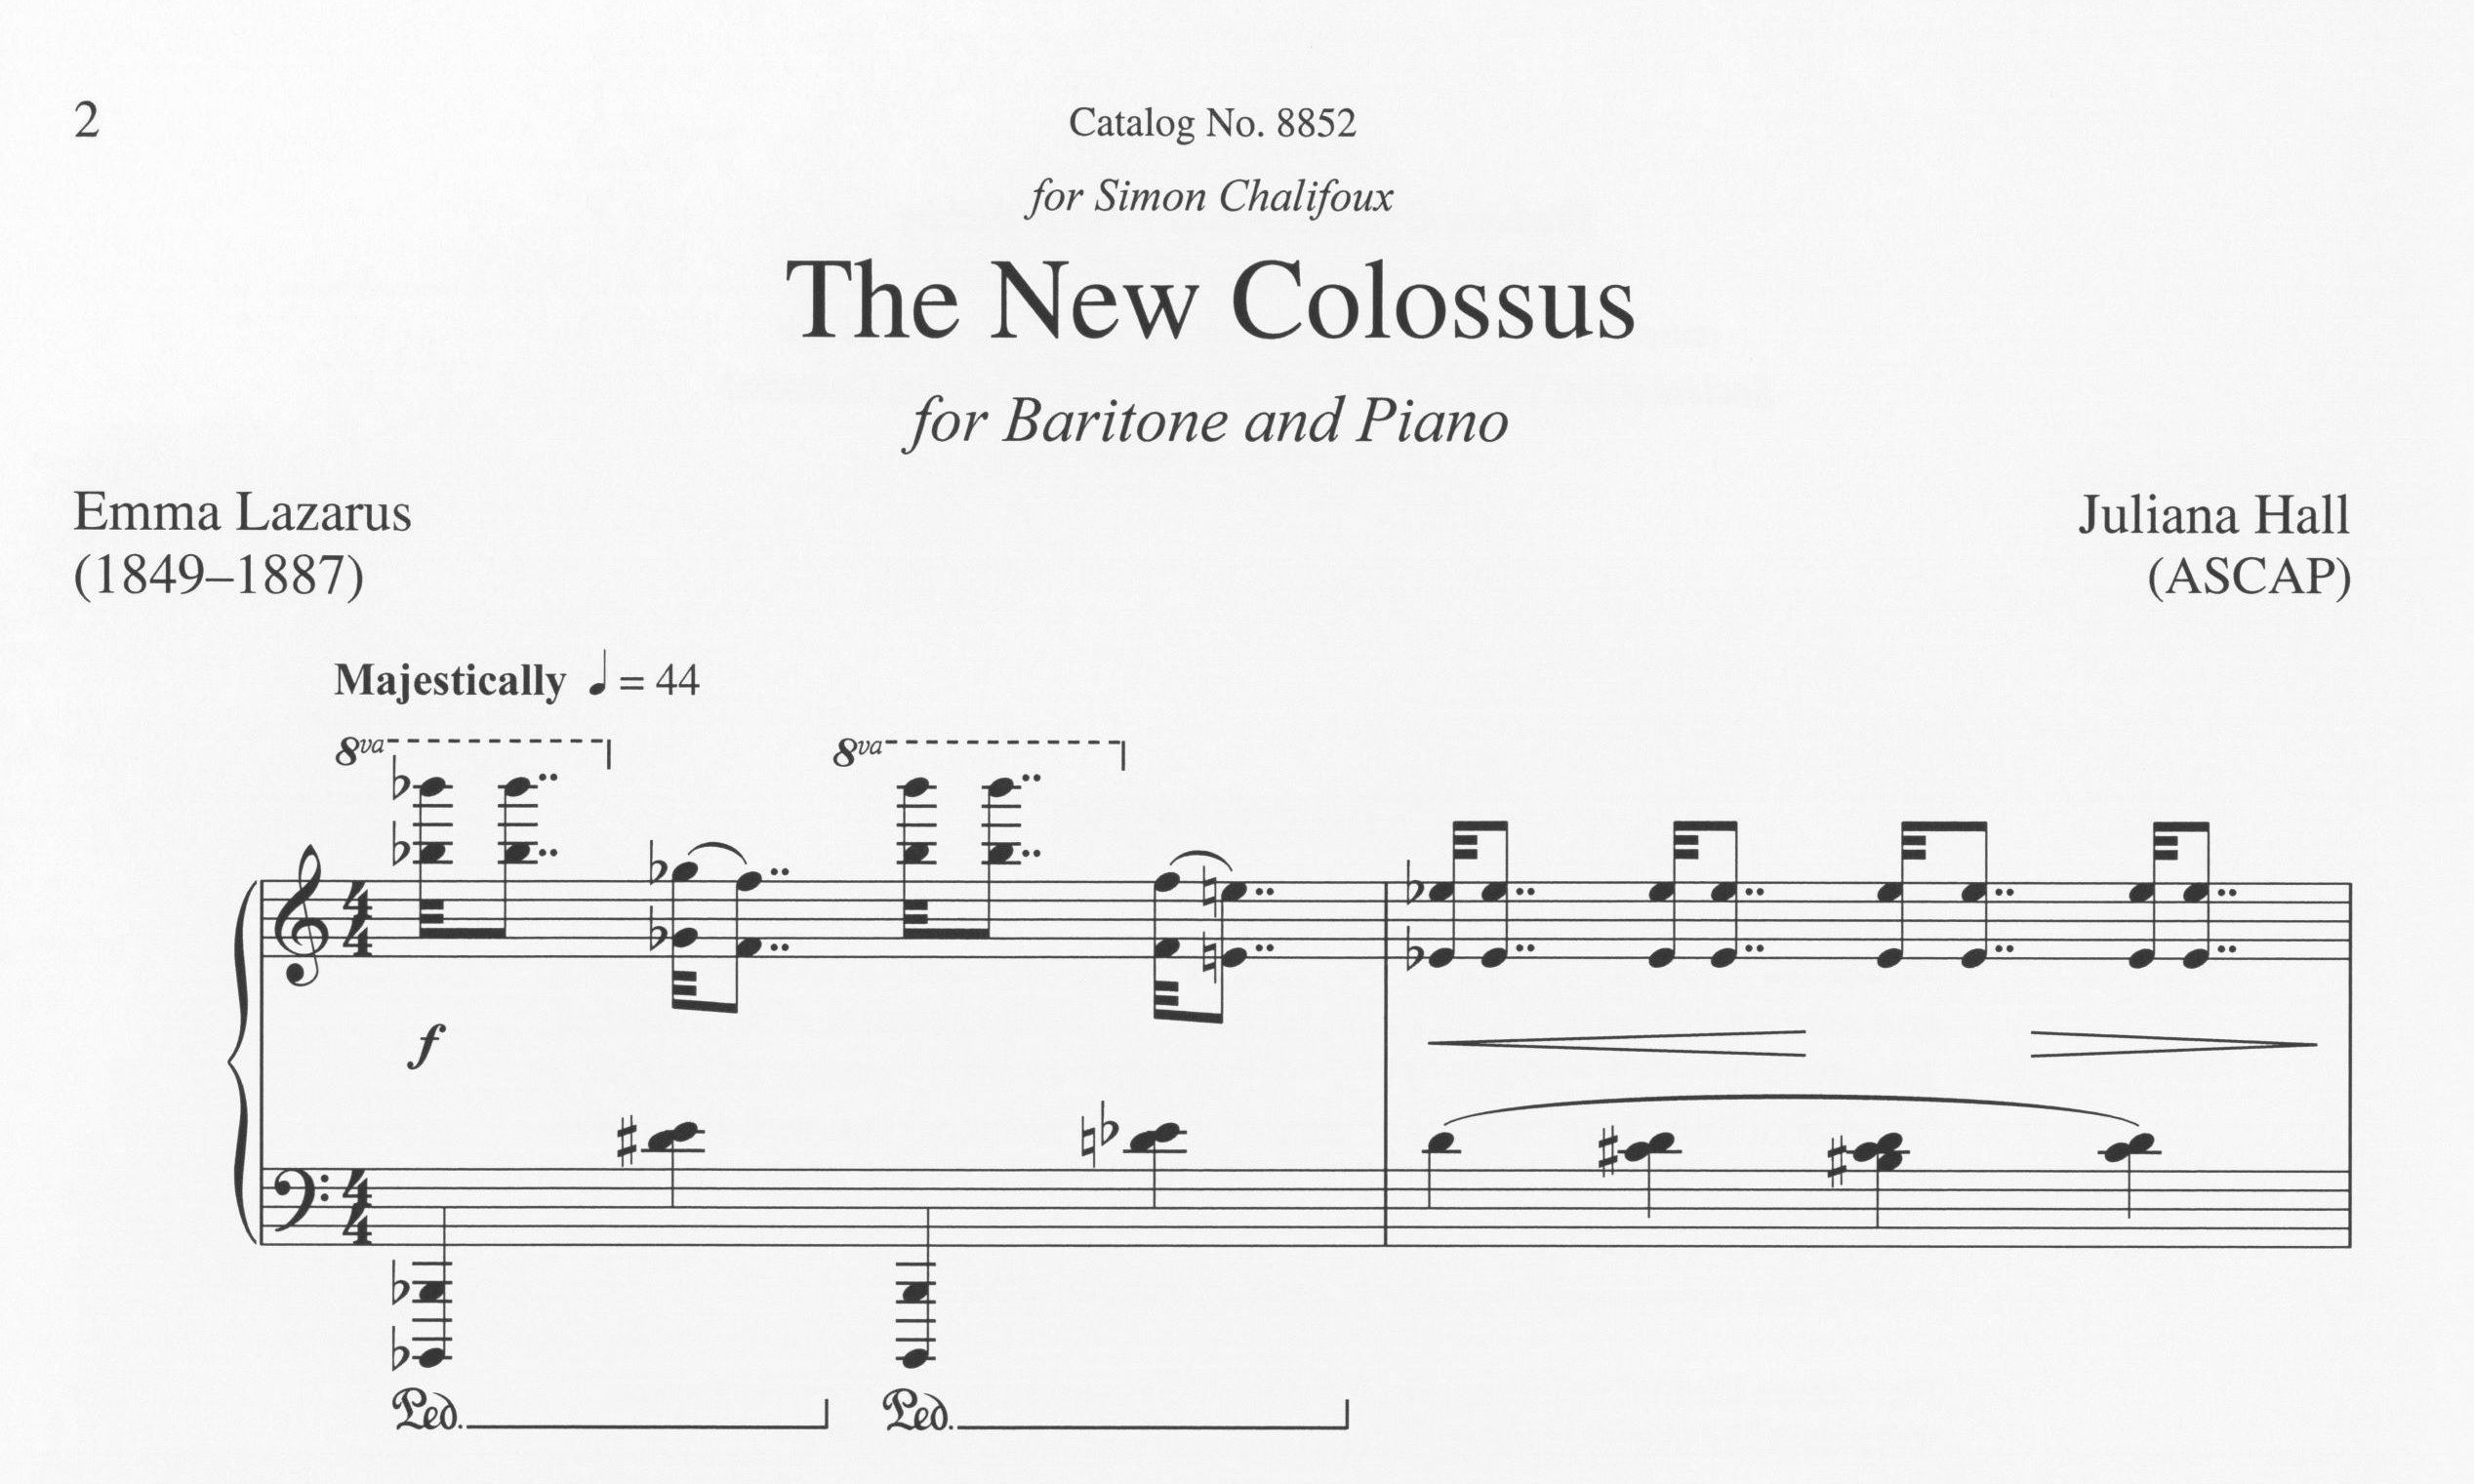 The New Colossus - Julianna Hall